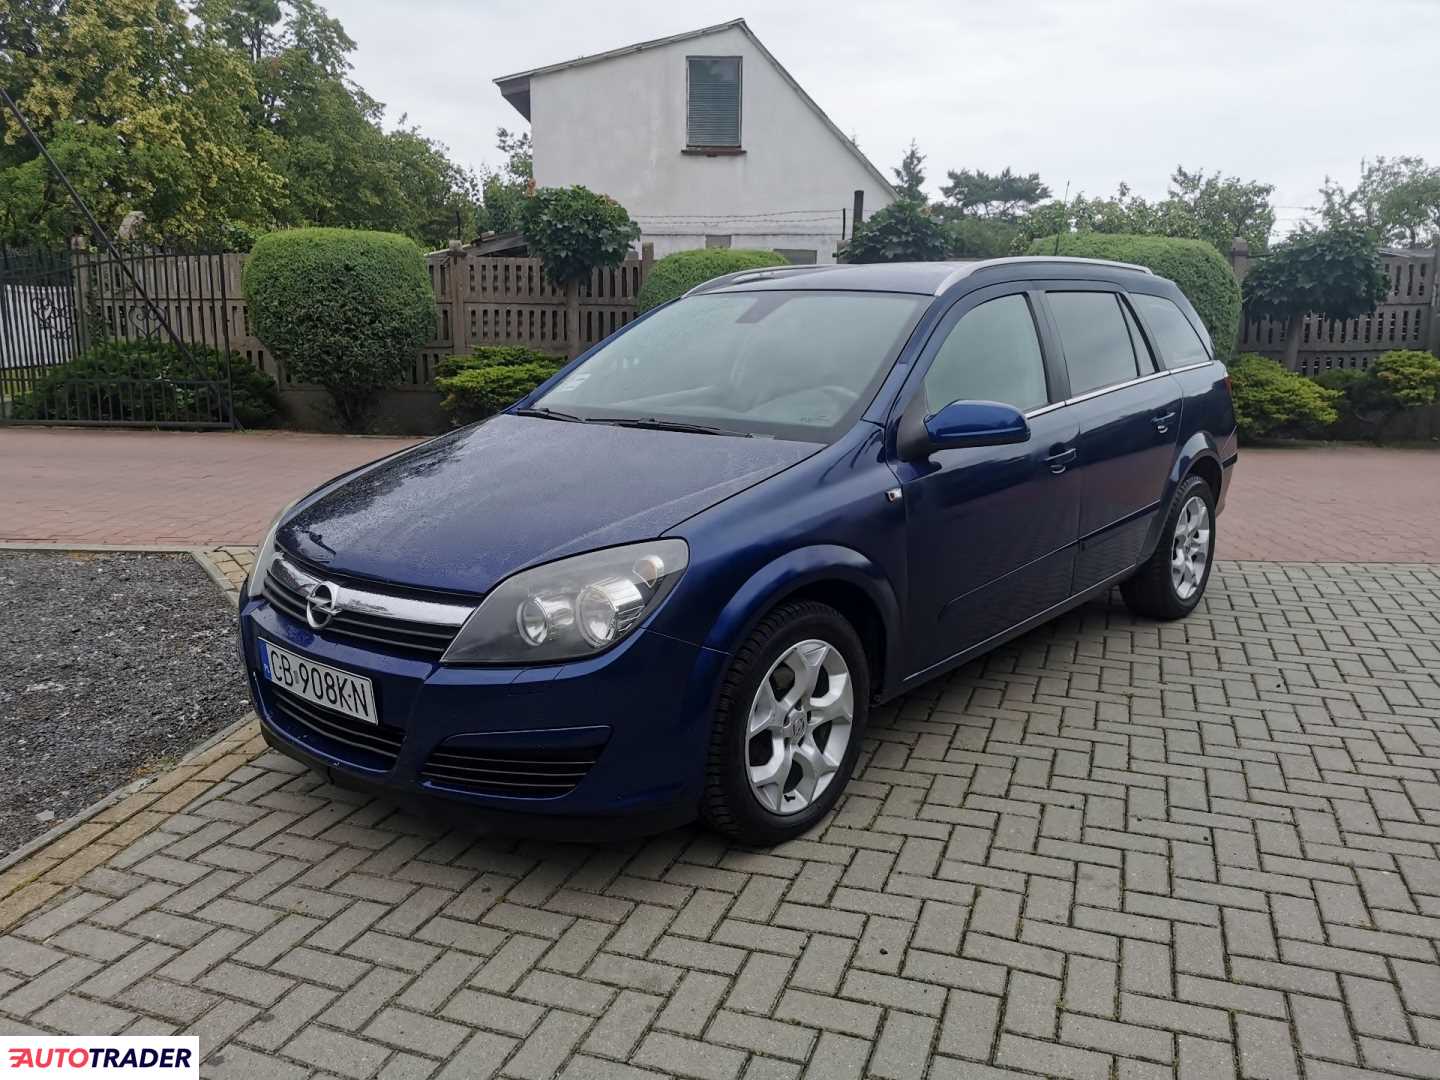 Opel Astra 2006 1.7 100 KM